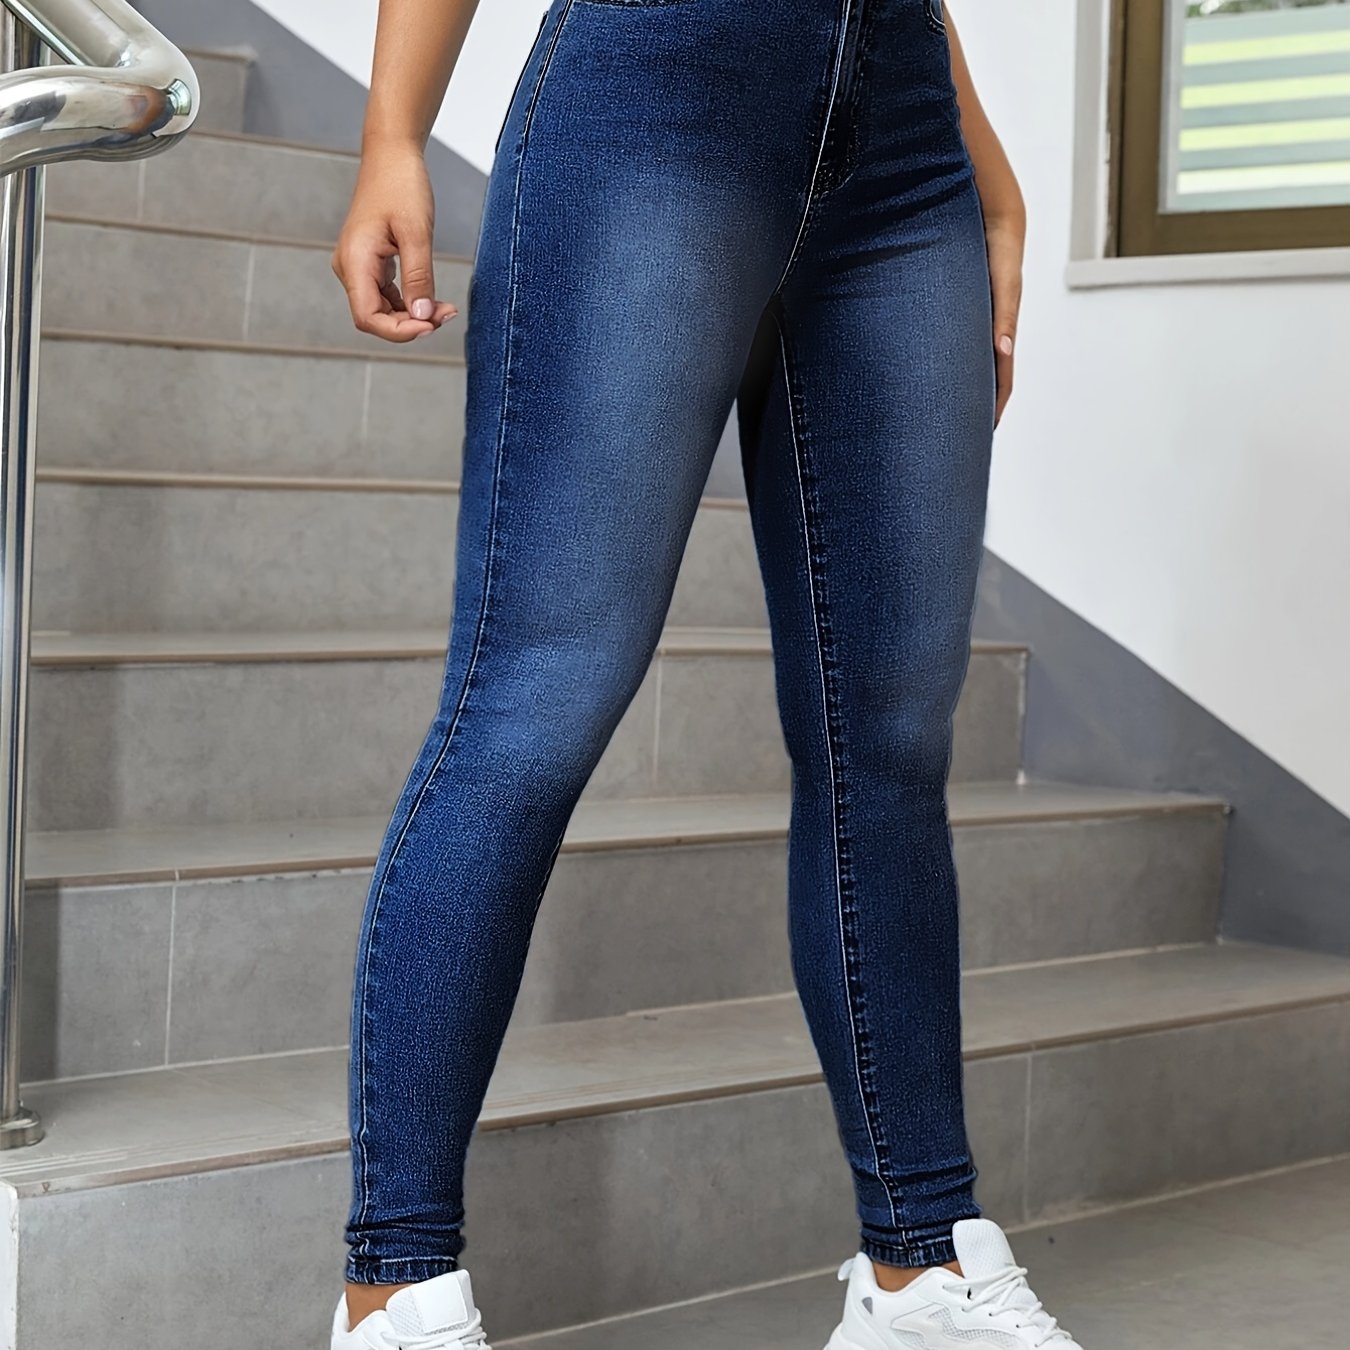 「lovevop」Blue High Waist Skinny Jeans, Slash Pockets High Rise Slim Fit Stretchy Denim Pants, Women's Denim Jeans & Clothing